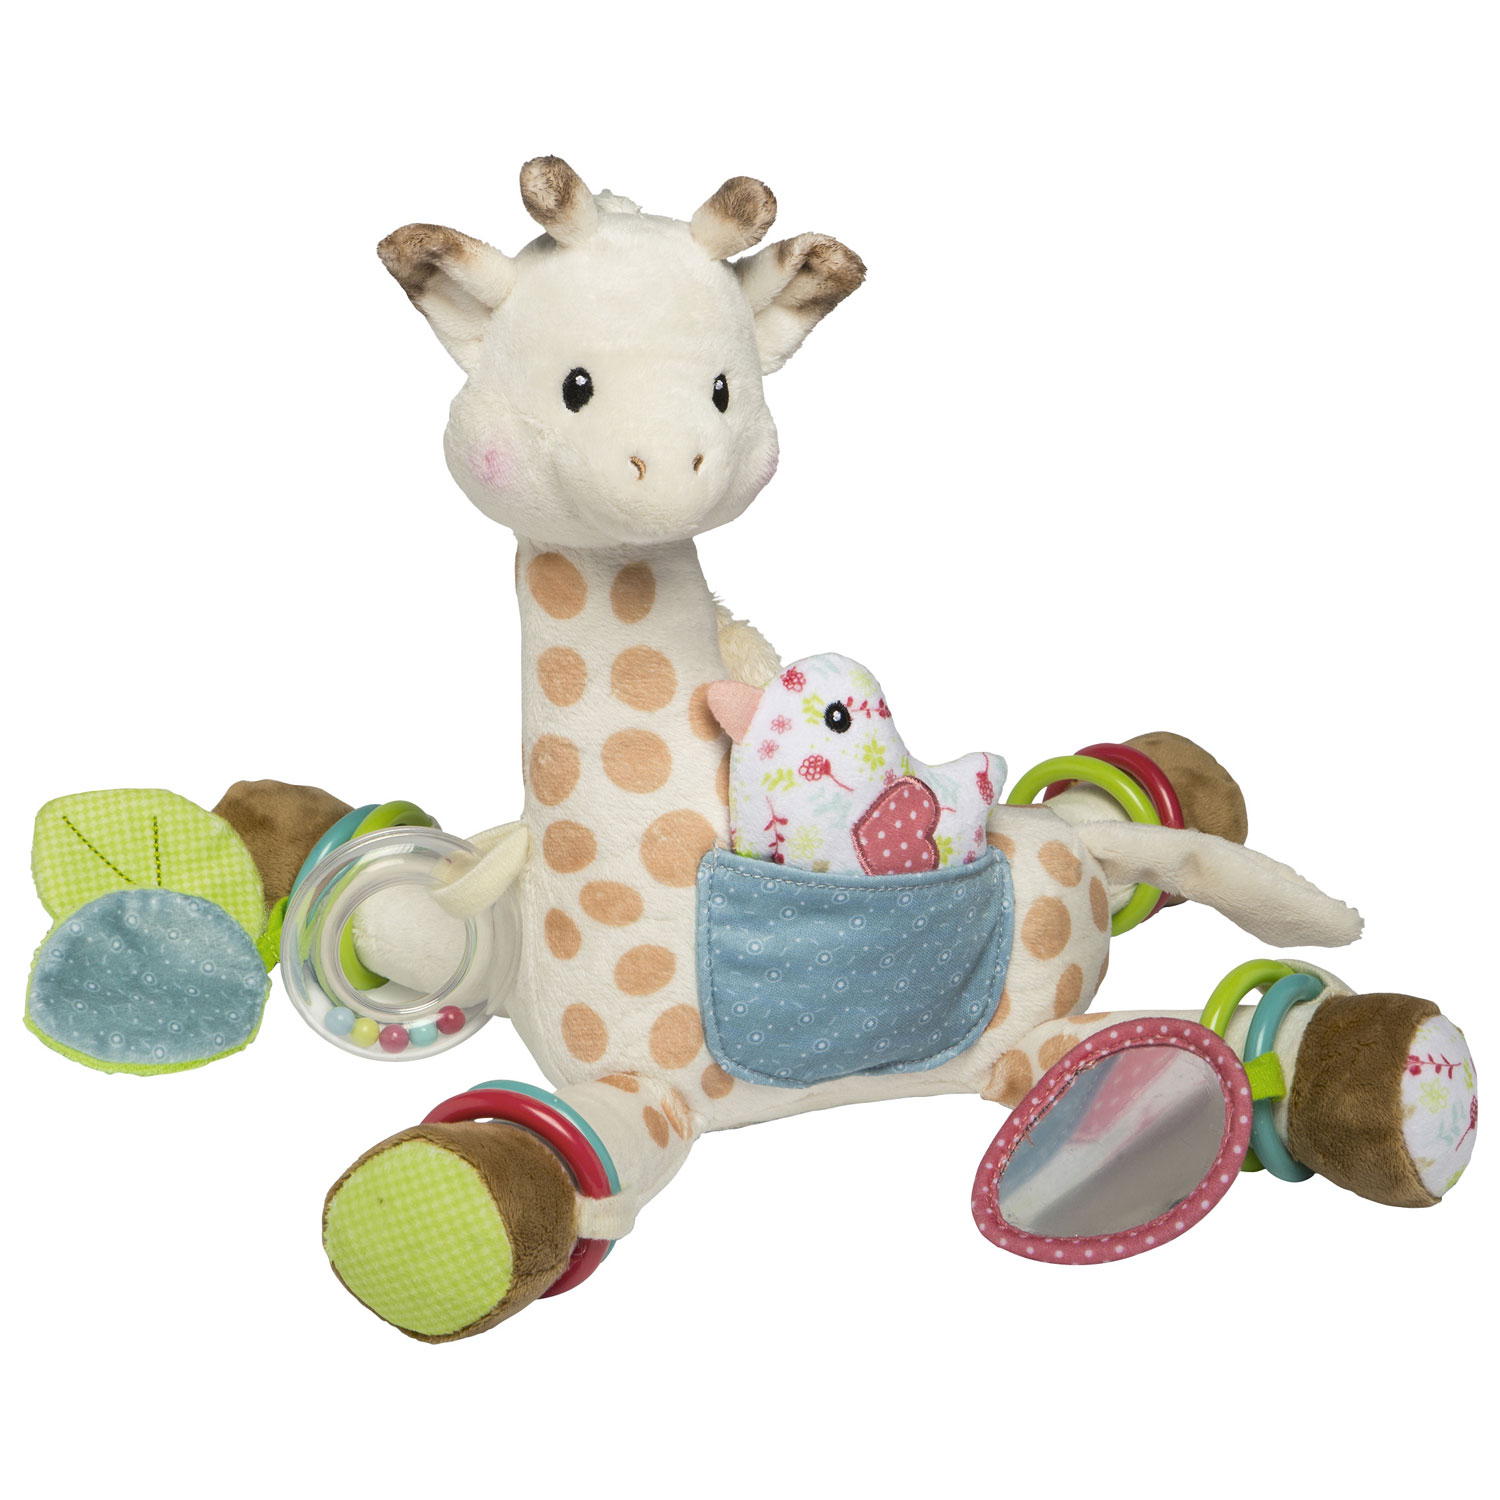 buy for baby or mom - sophie the giraffe plush